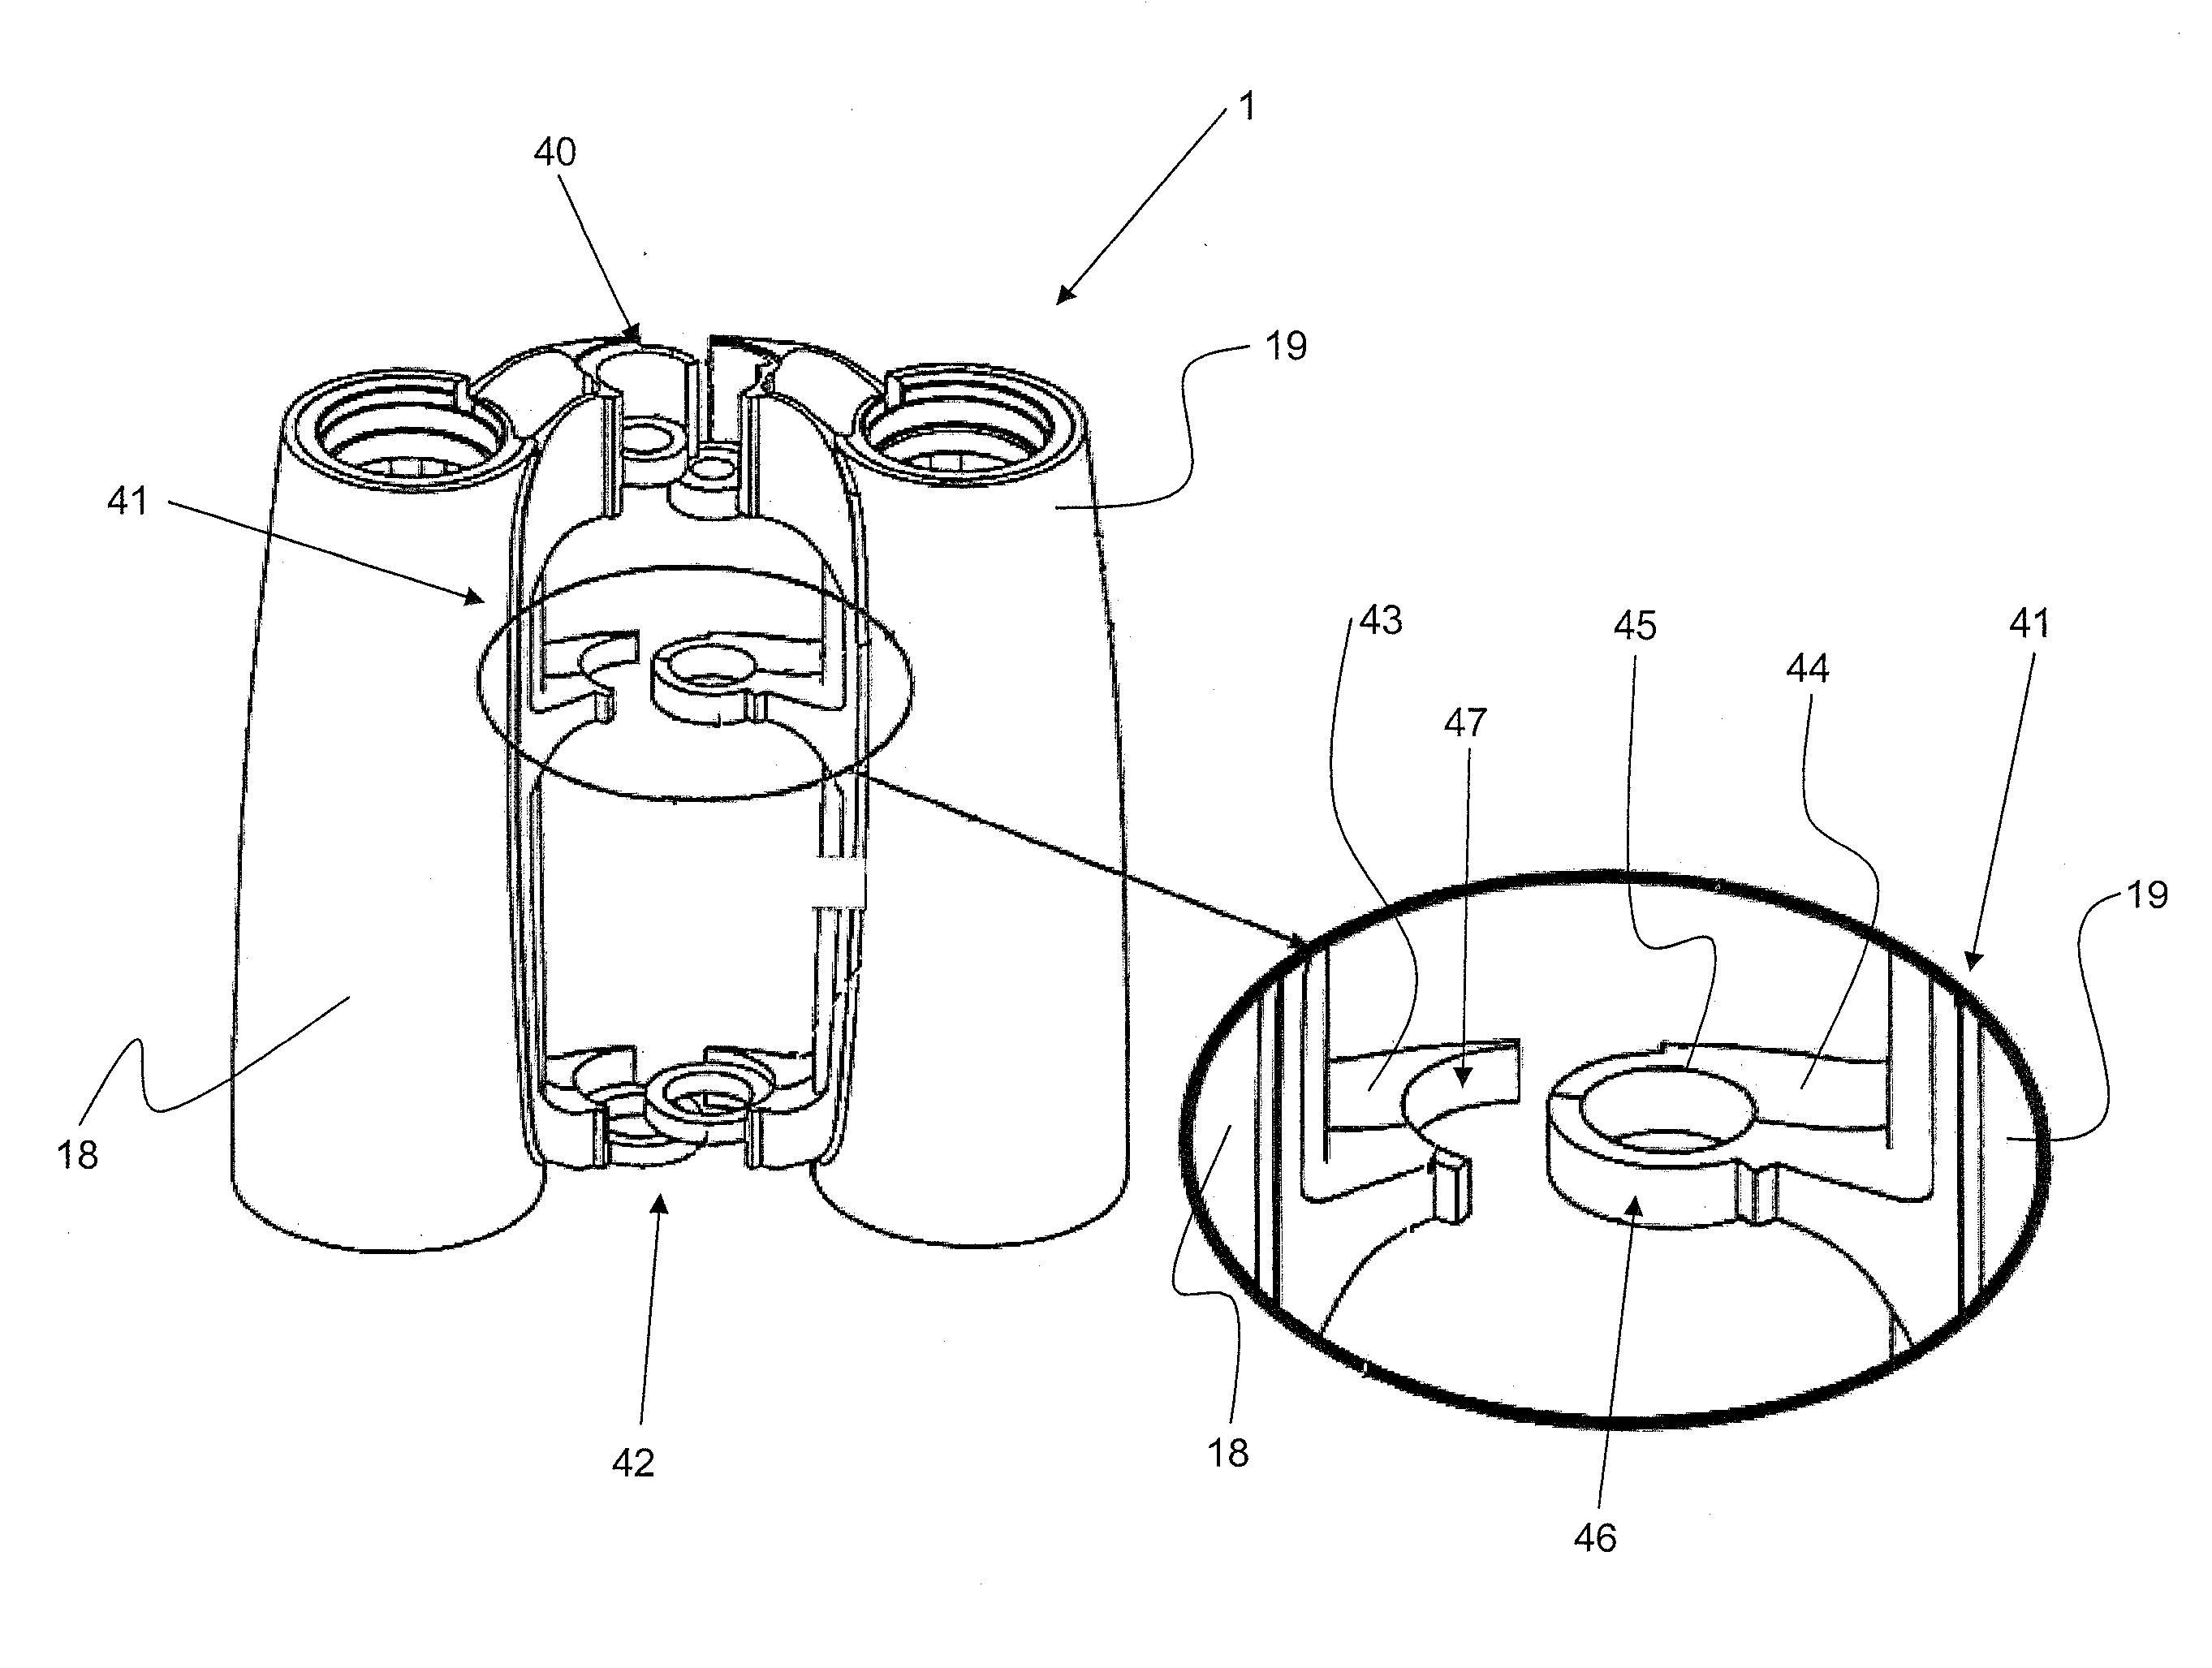 Long-range optical apparatus including binoculars